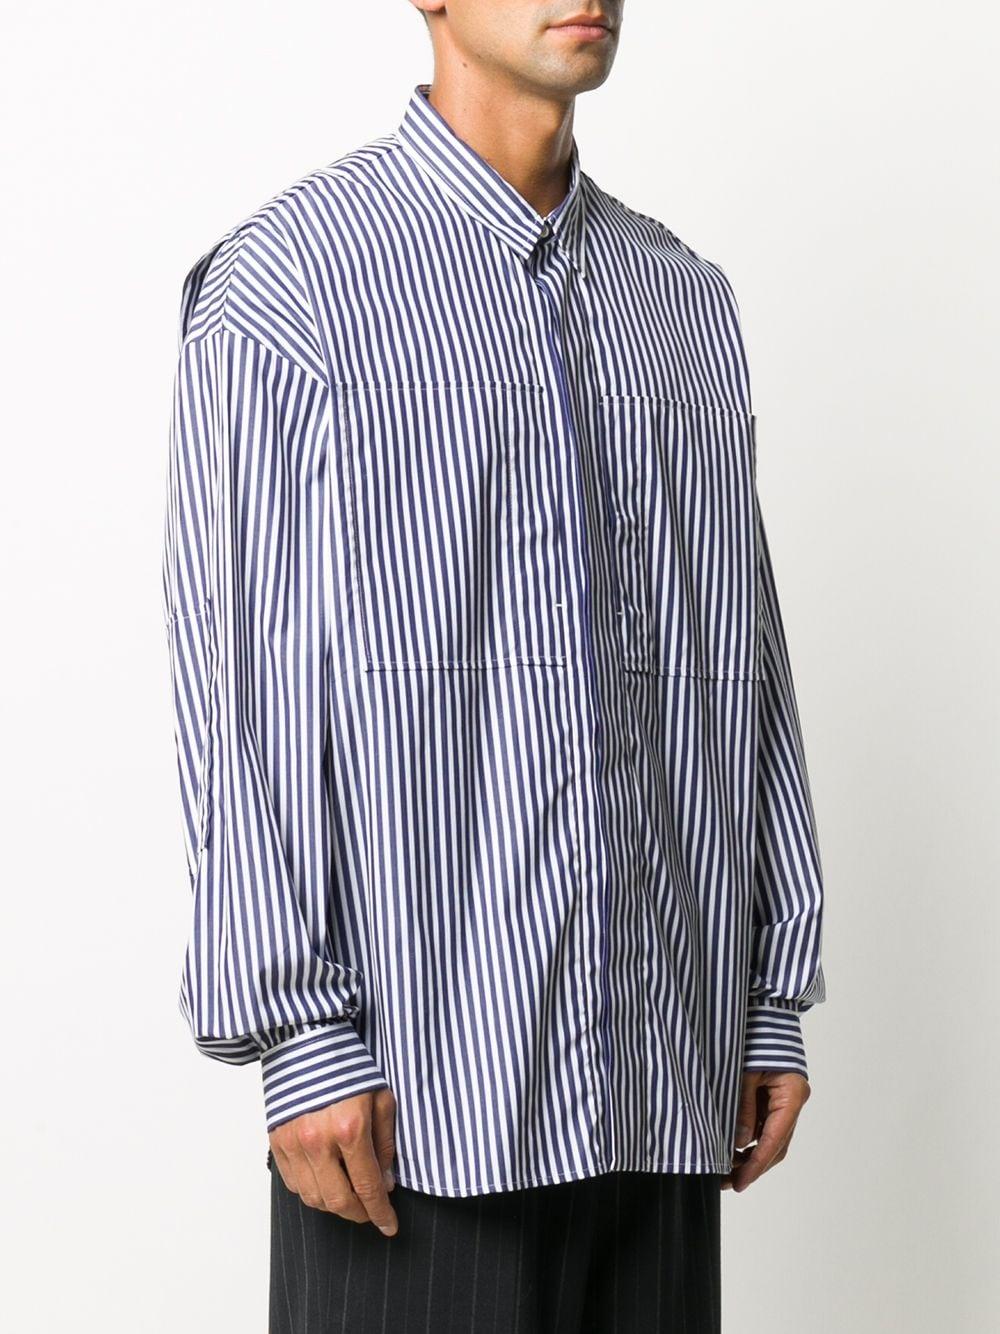 Juun.J Cotton Oversized Striped Shirt in Blue for Men - Lyst